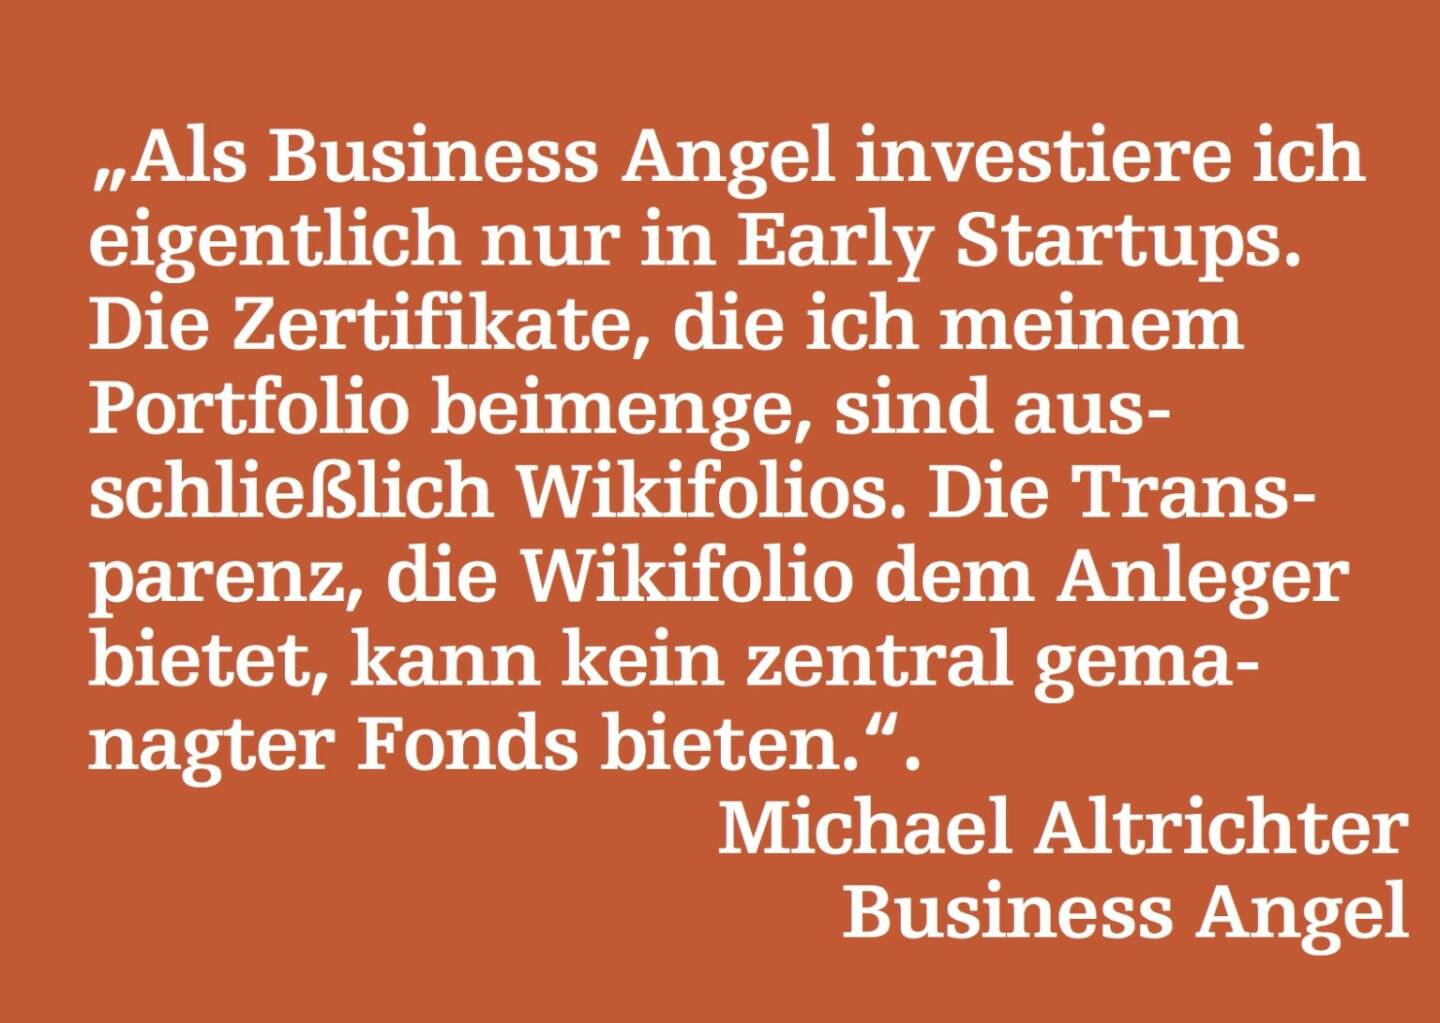 Michael Altrichter, Business Angel